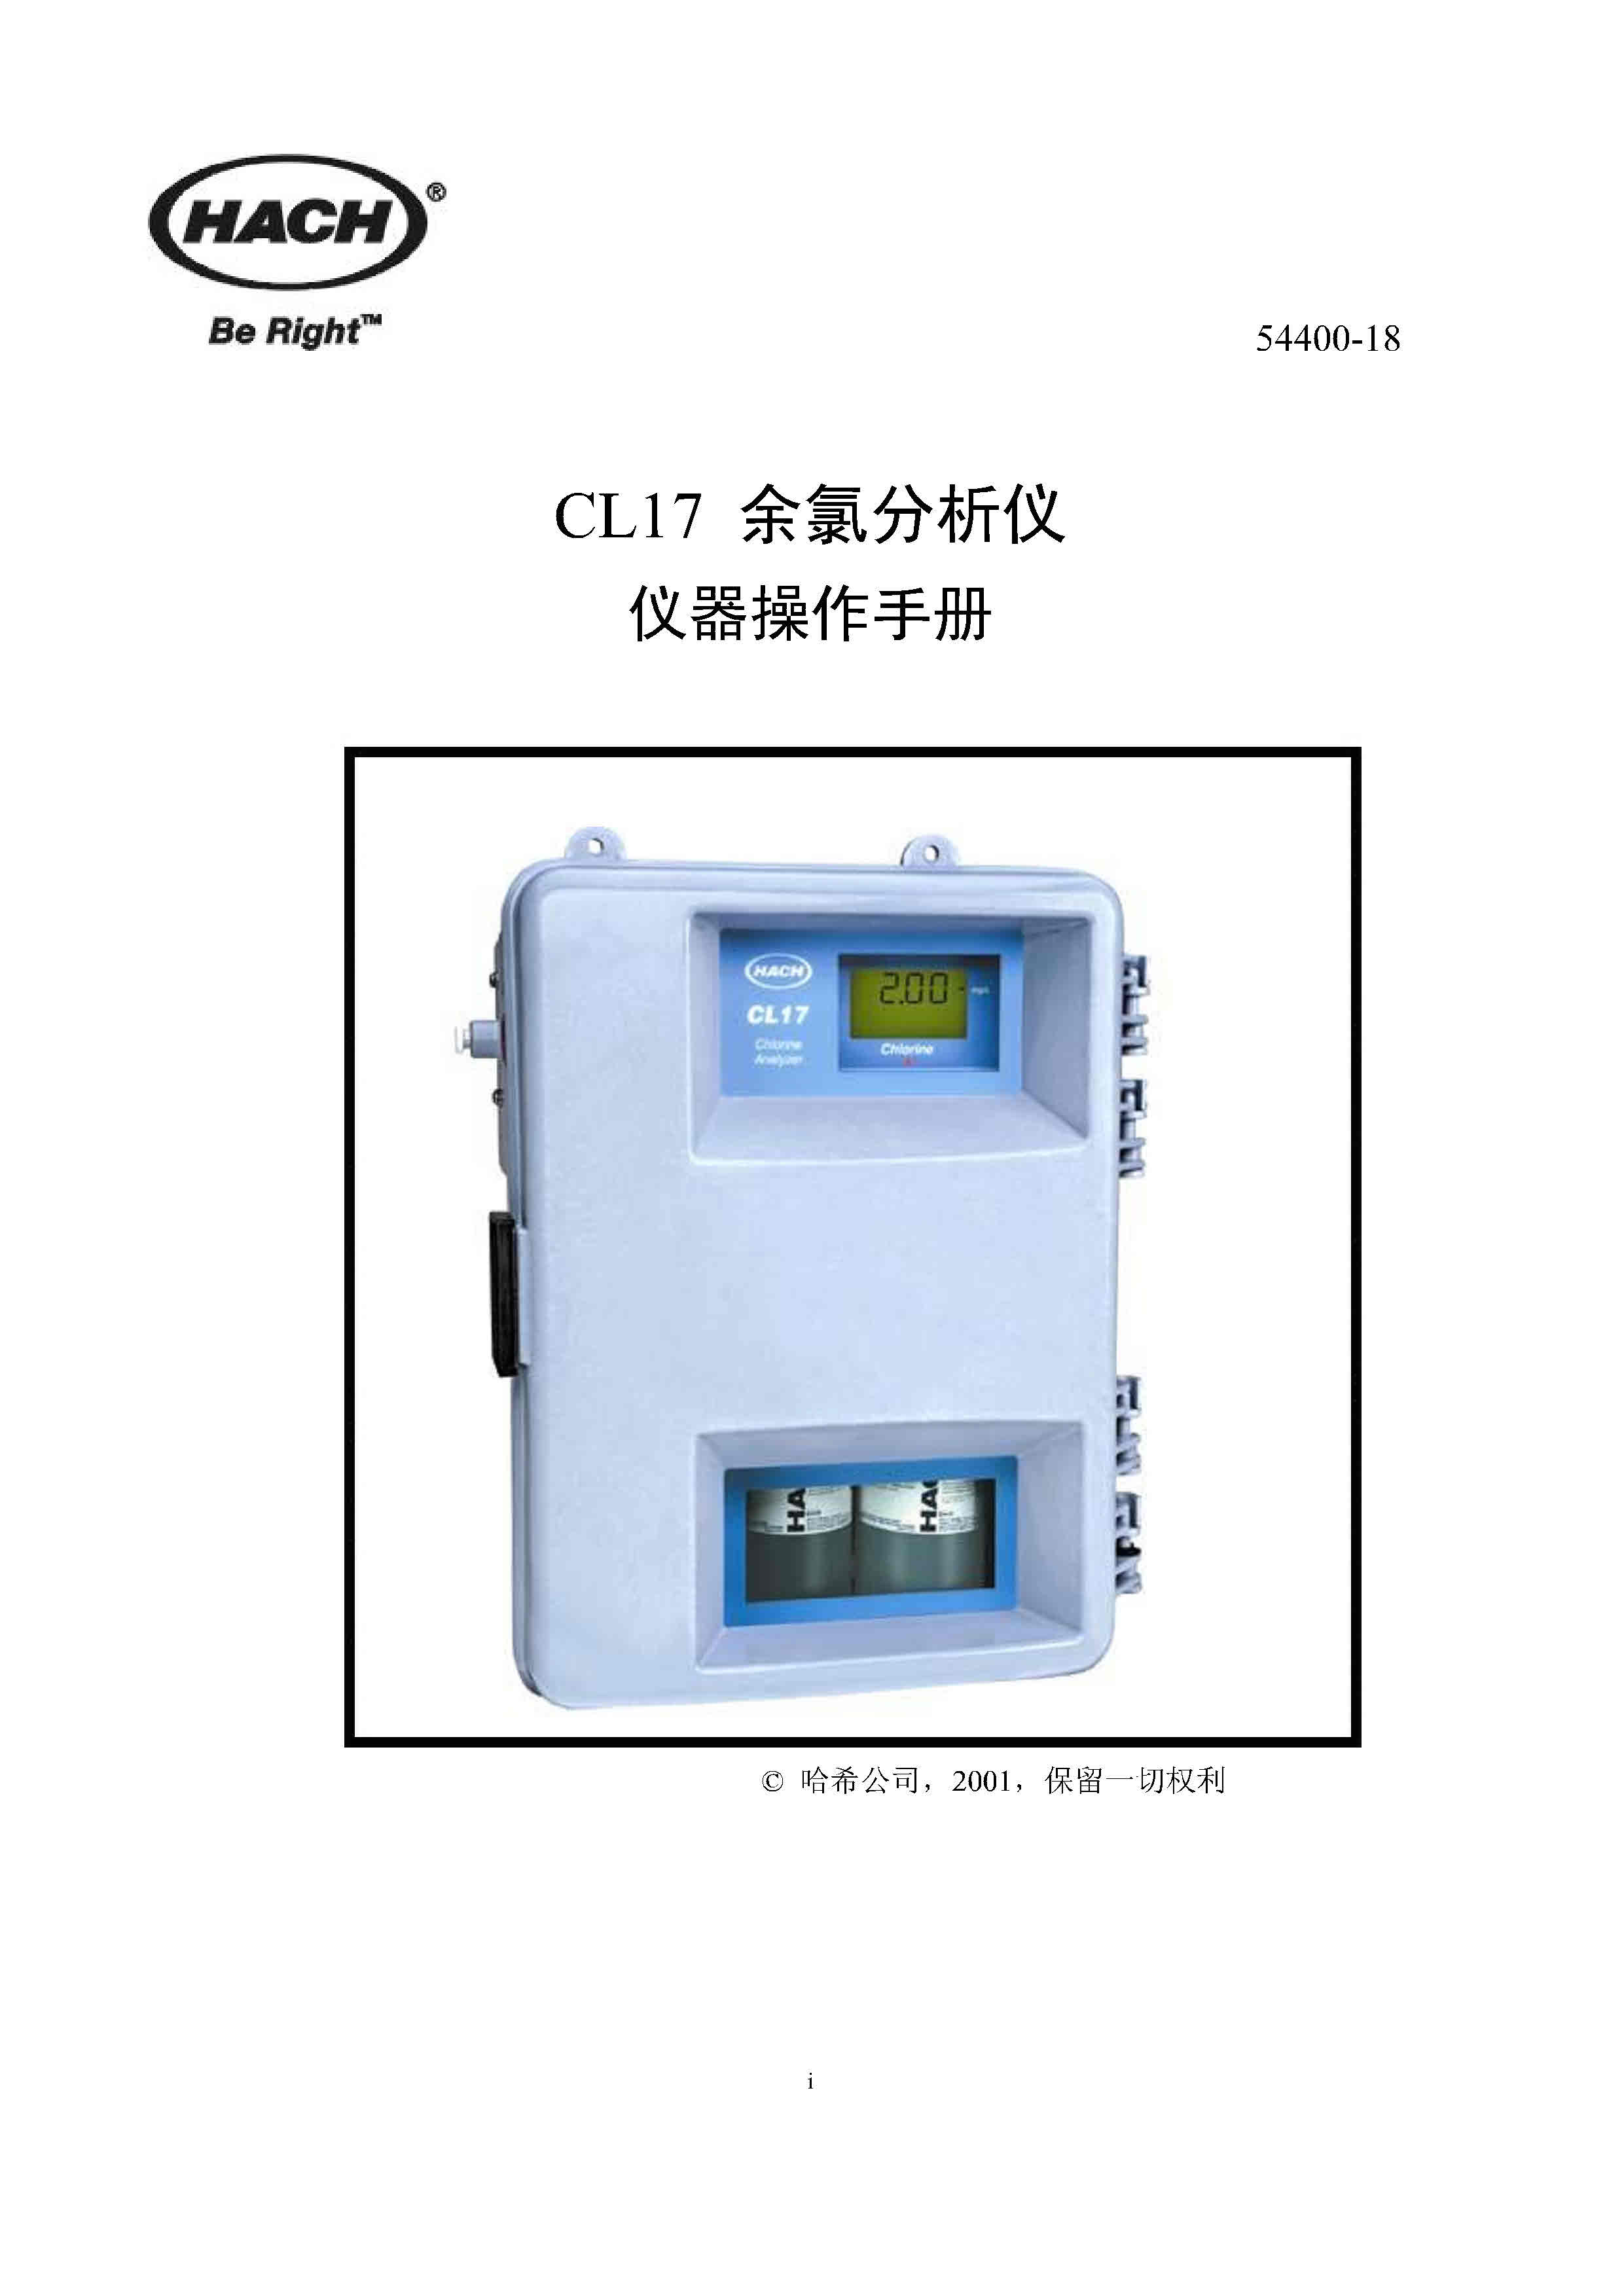 HACH哈希 CL17 余氯分析仪 仪器操作手册